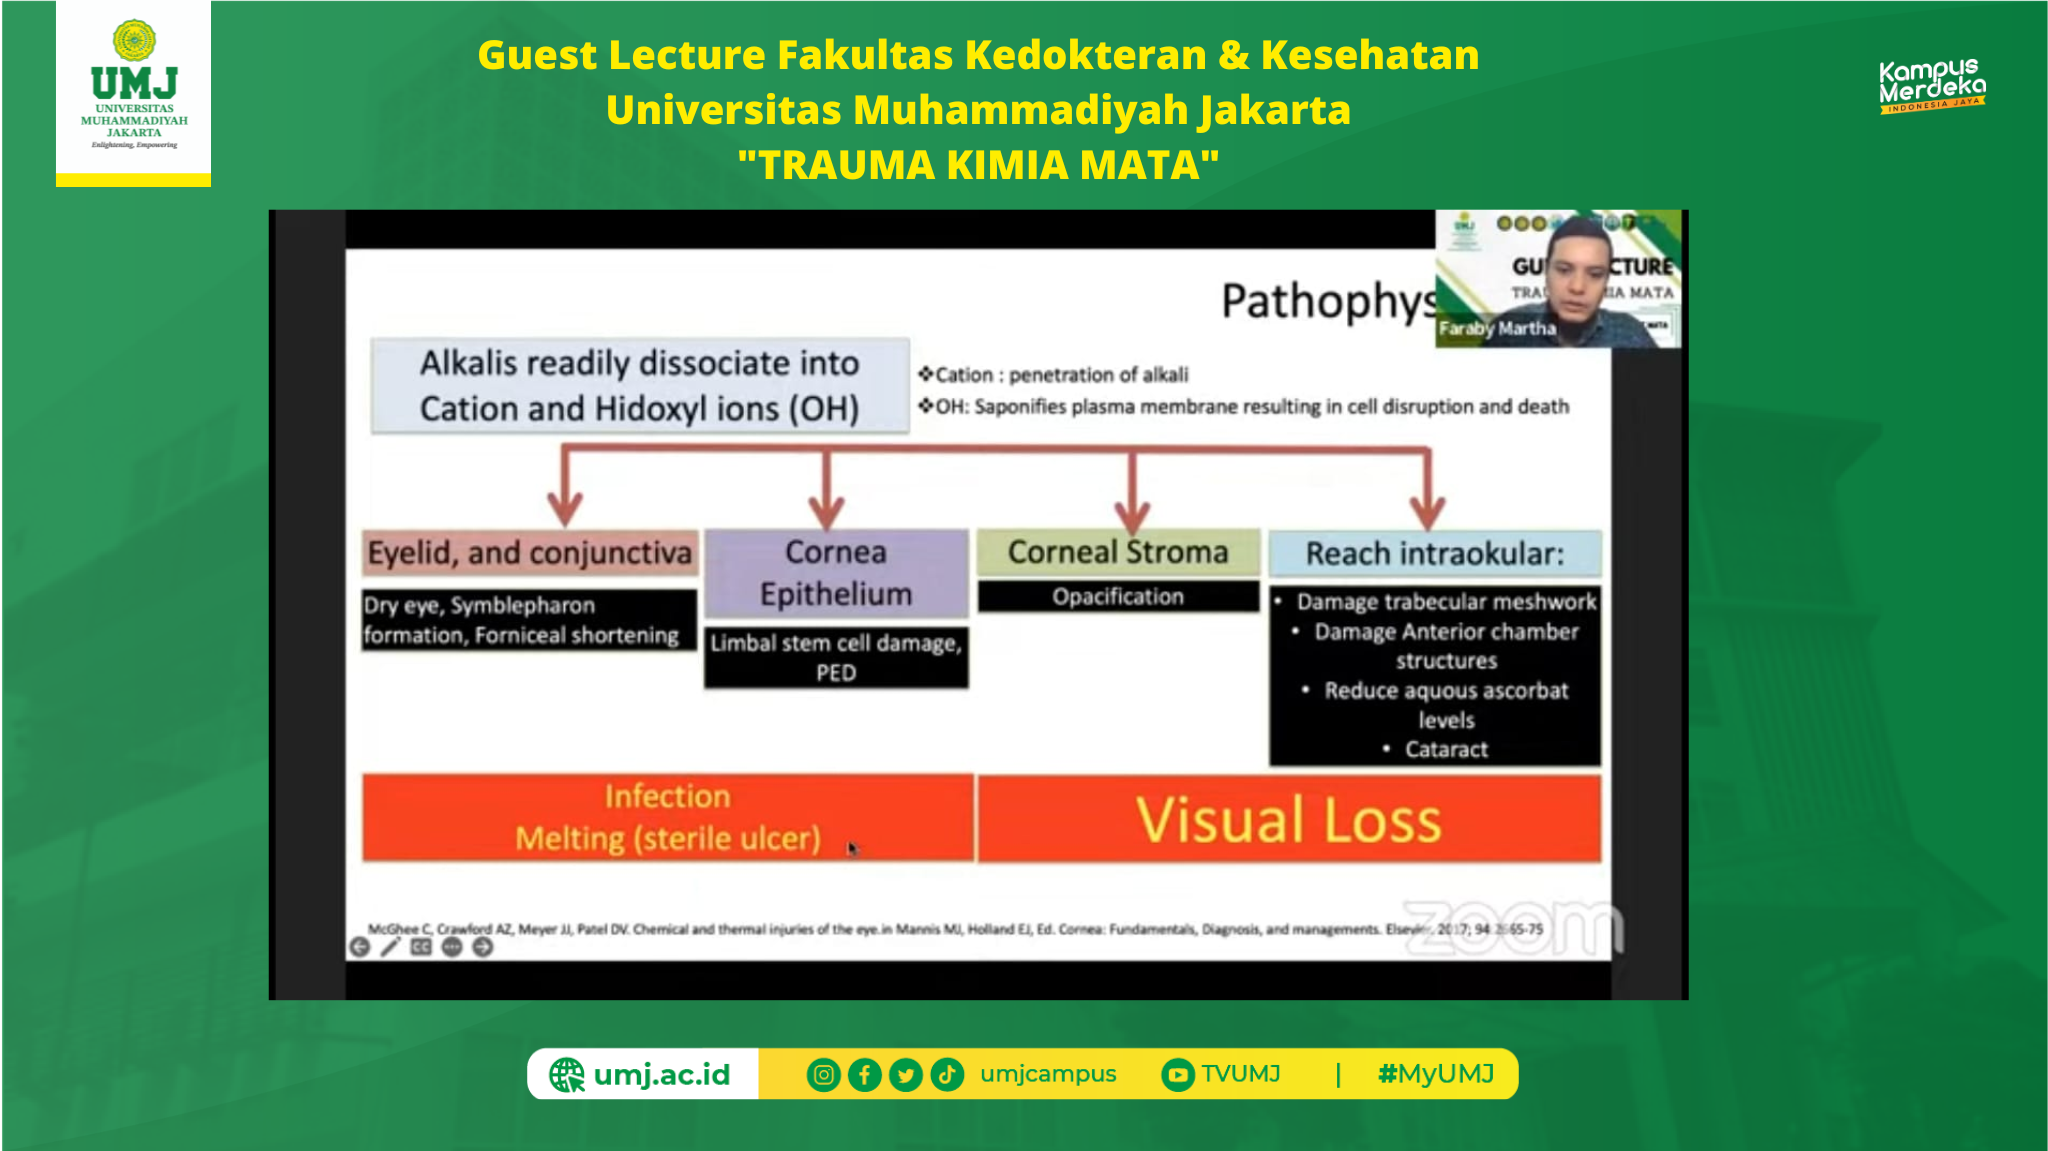 Guest Lecture FKK UMJ